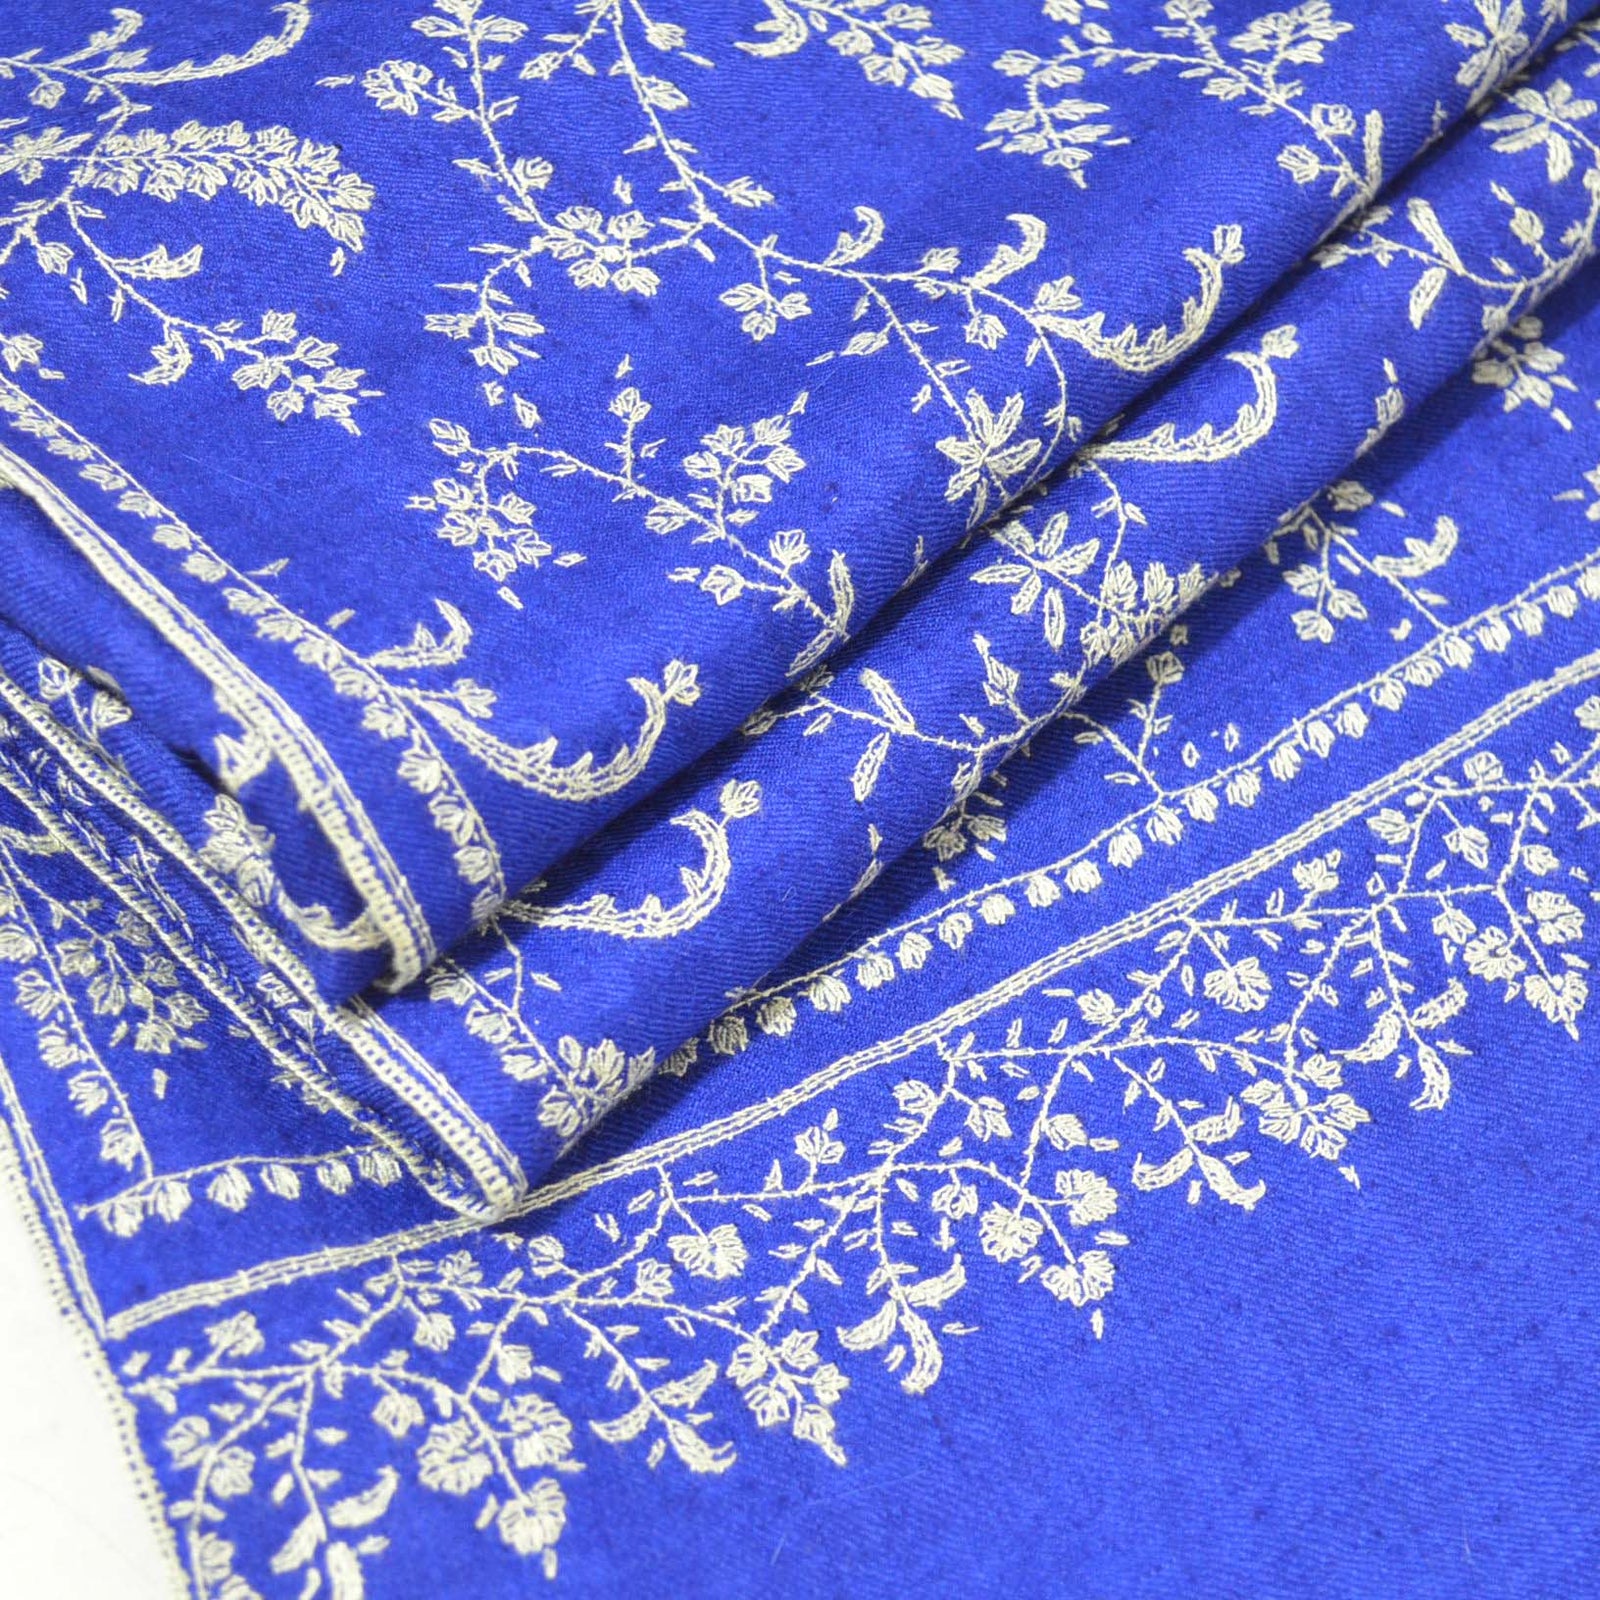 Blue Embroidery Shawl